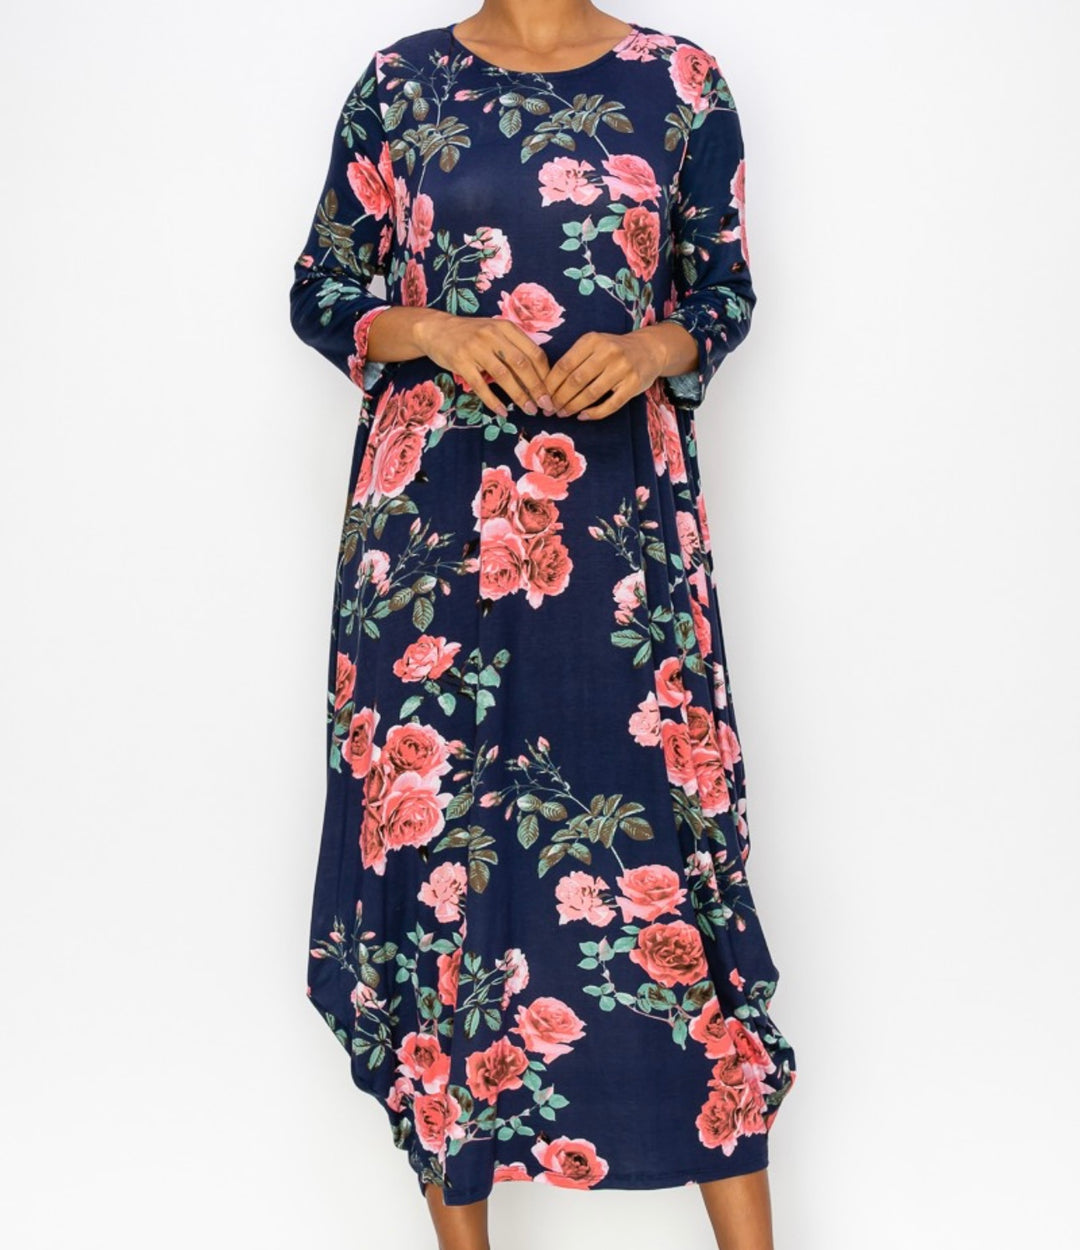 Poliana Navy Blue with Pink Rose Print Pattern Bubble Dress Long Maxi Dress